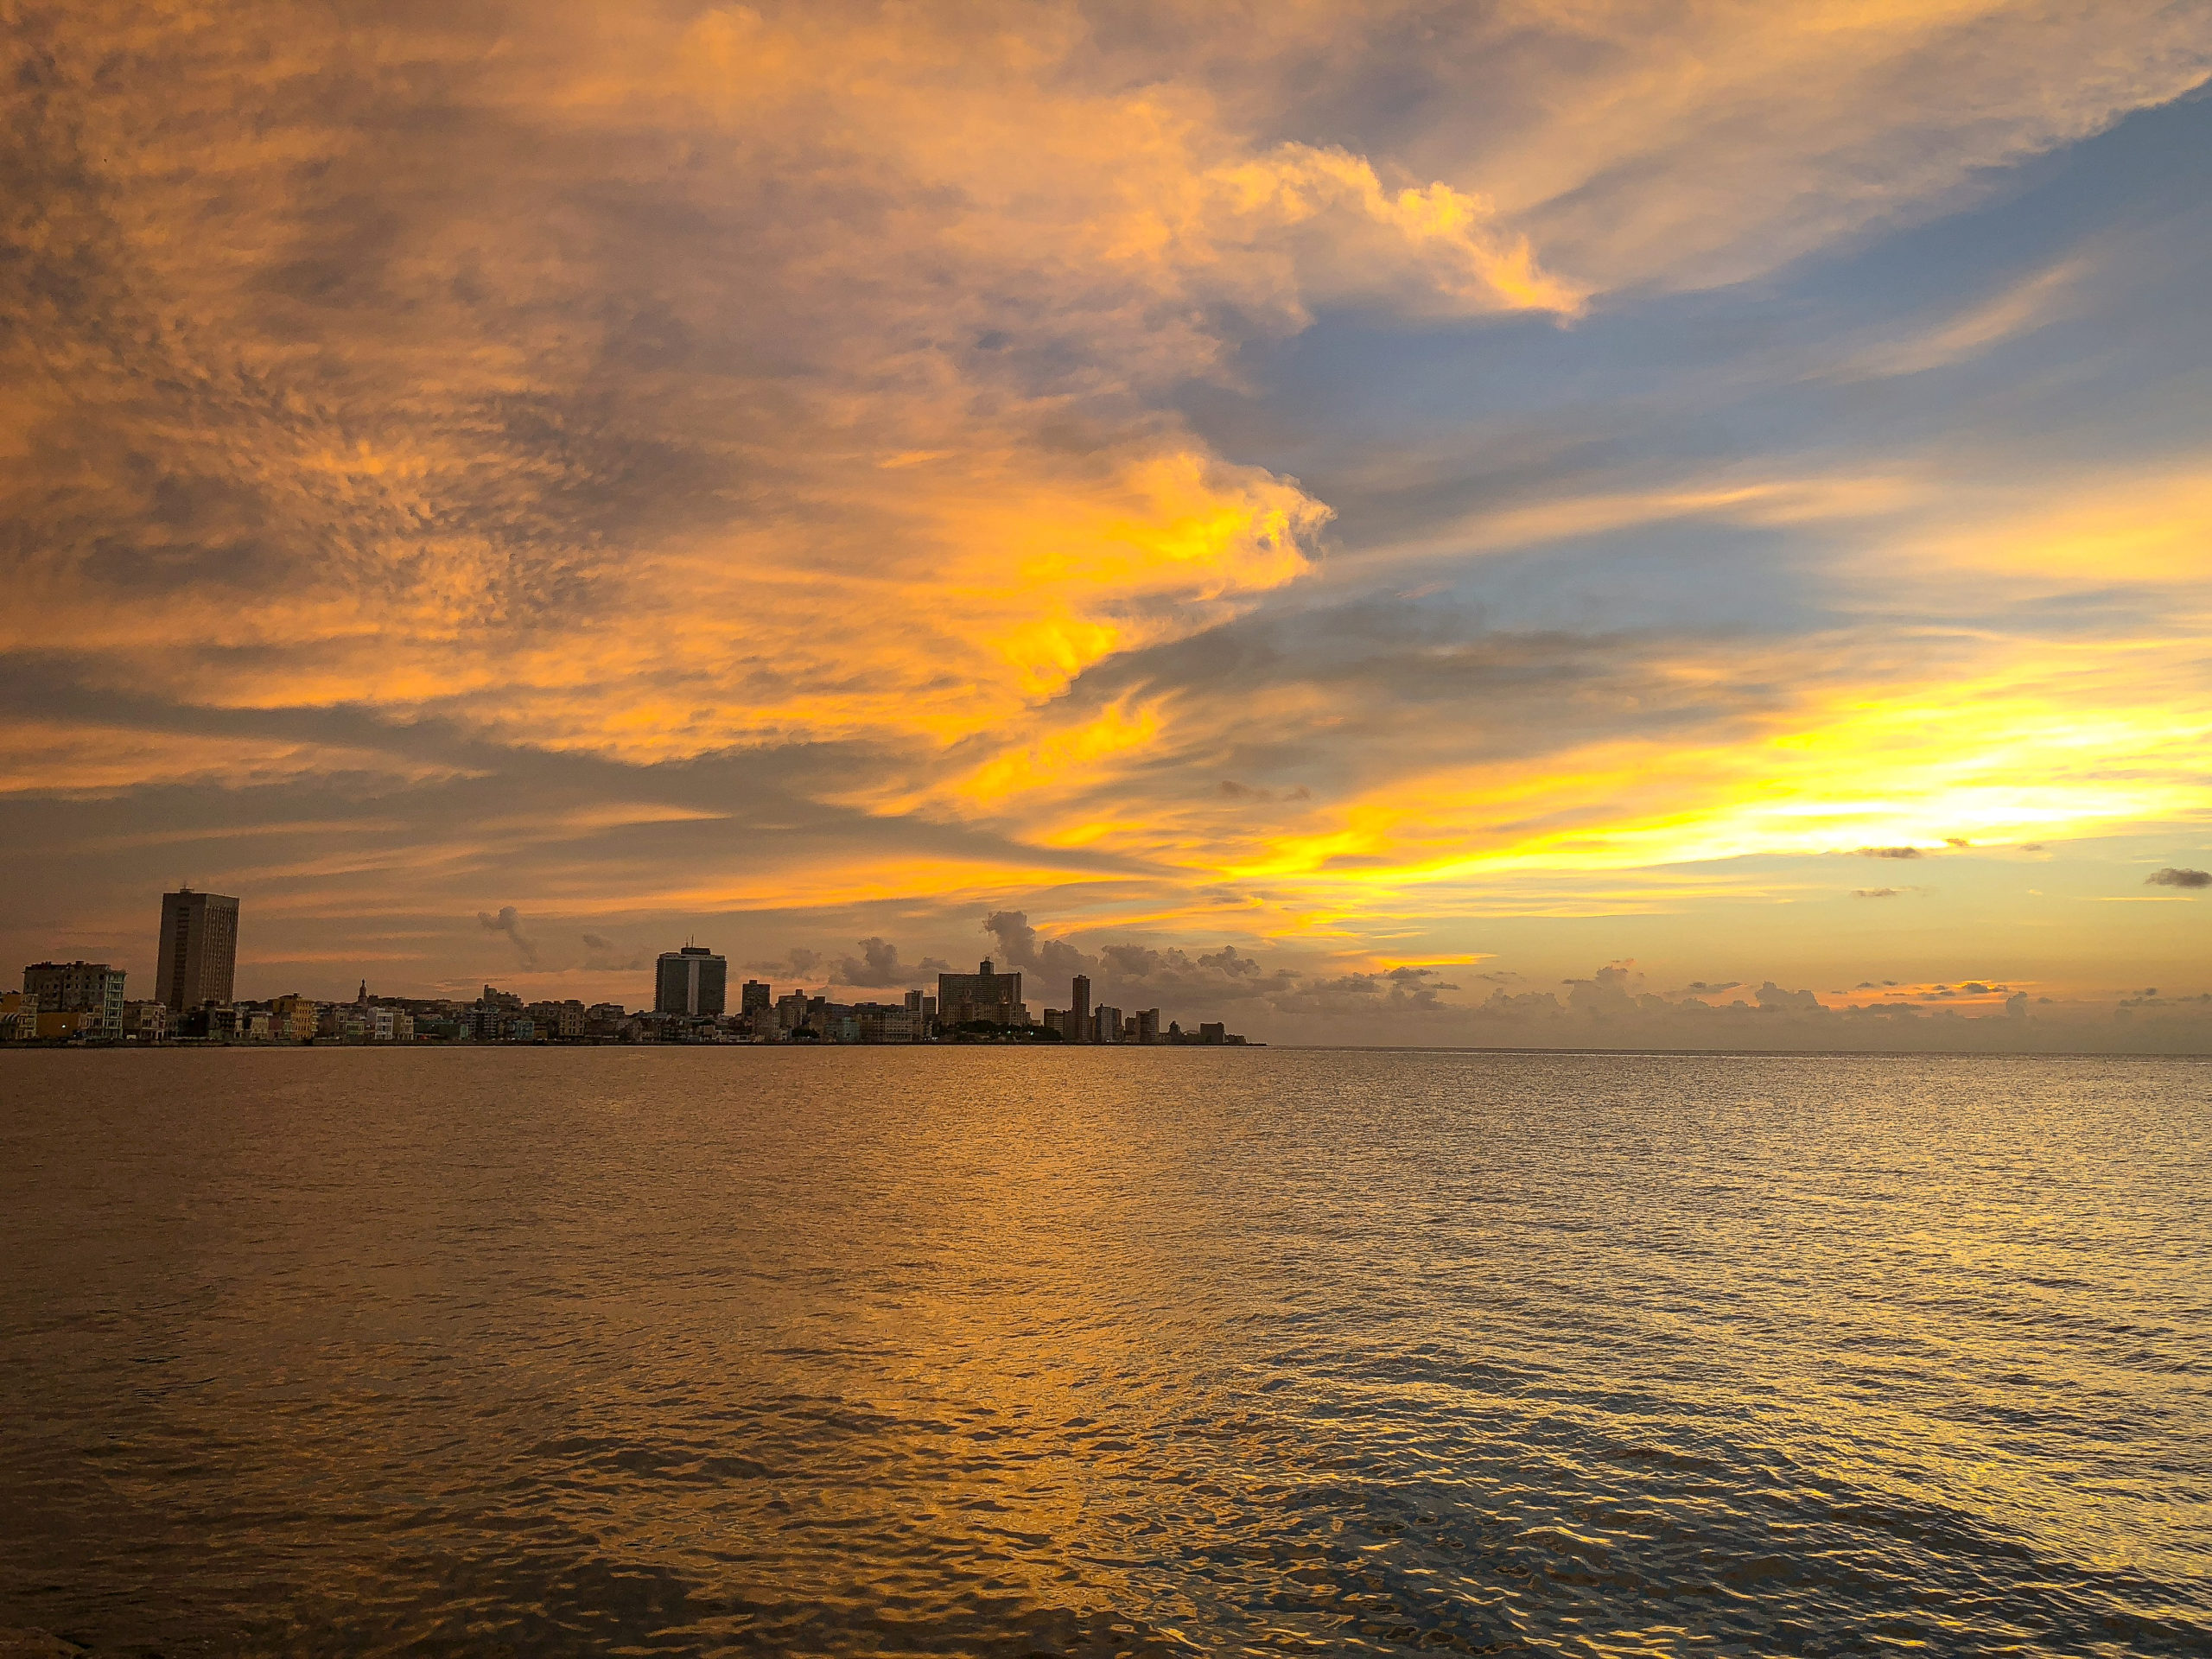 Sunset over la Habana in Cuba in El Malecon